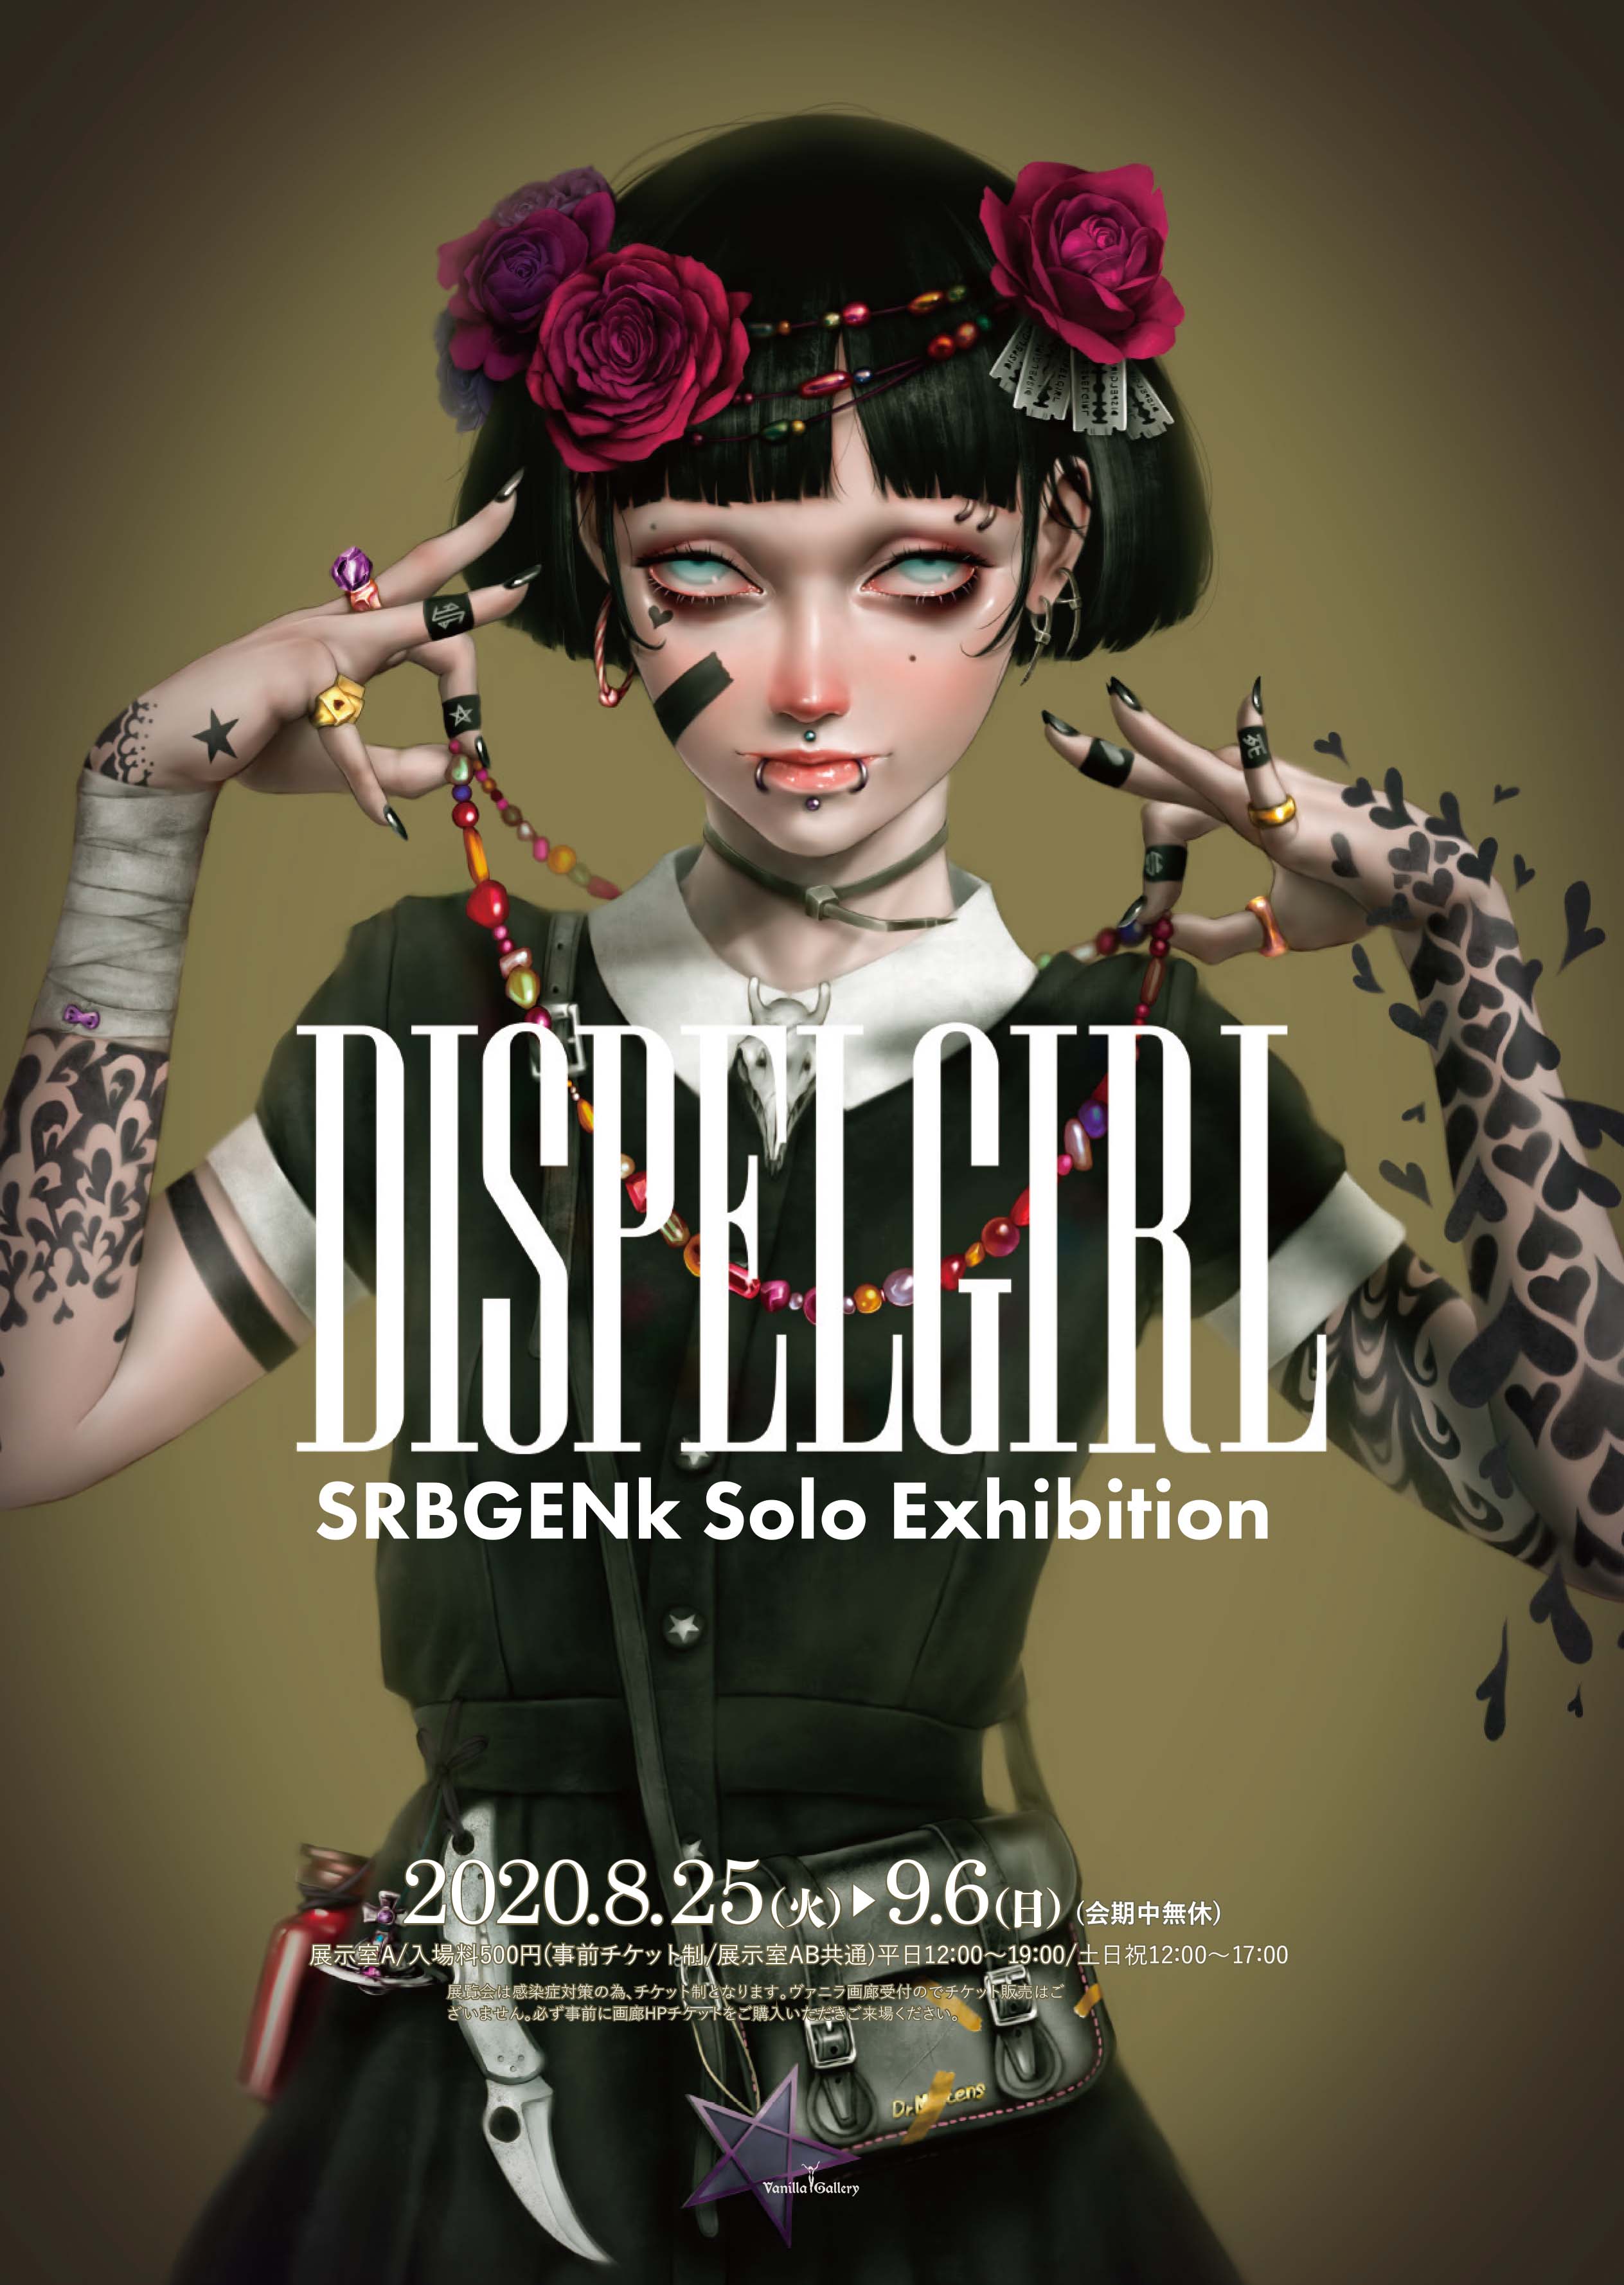 SRBGENk個展「DISPELGIRL」/キジメッカ作品展「キジメッ禍2020」 2020年8月25日(火)～9月6日(日)